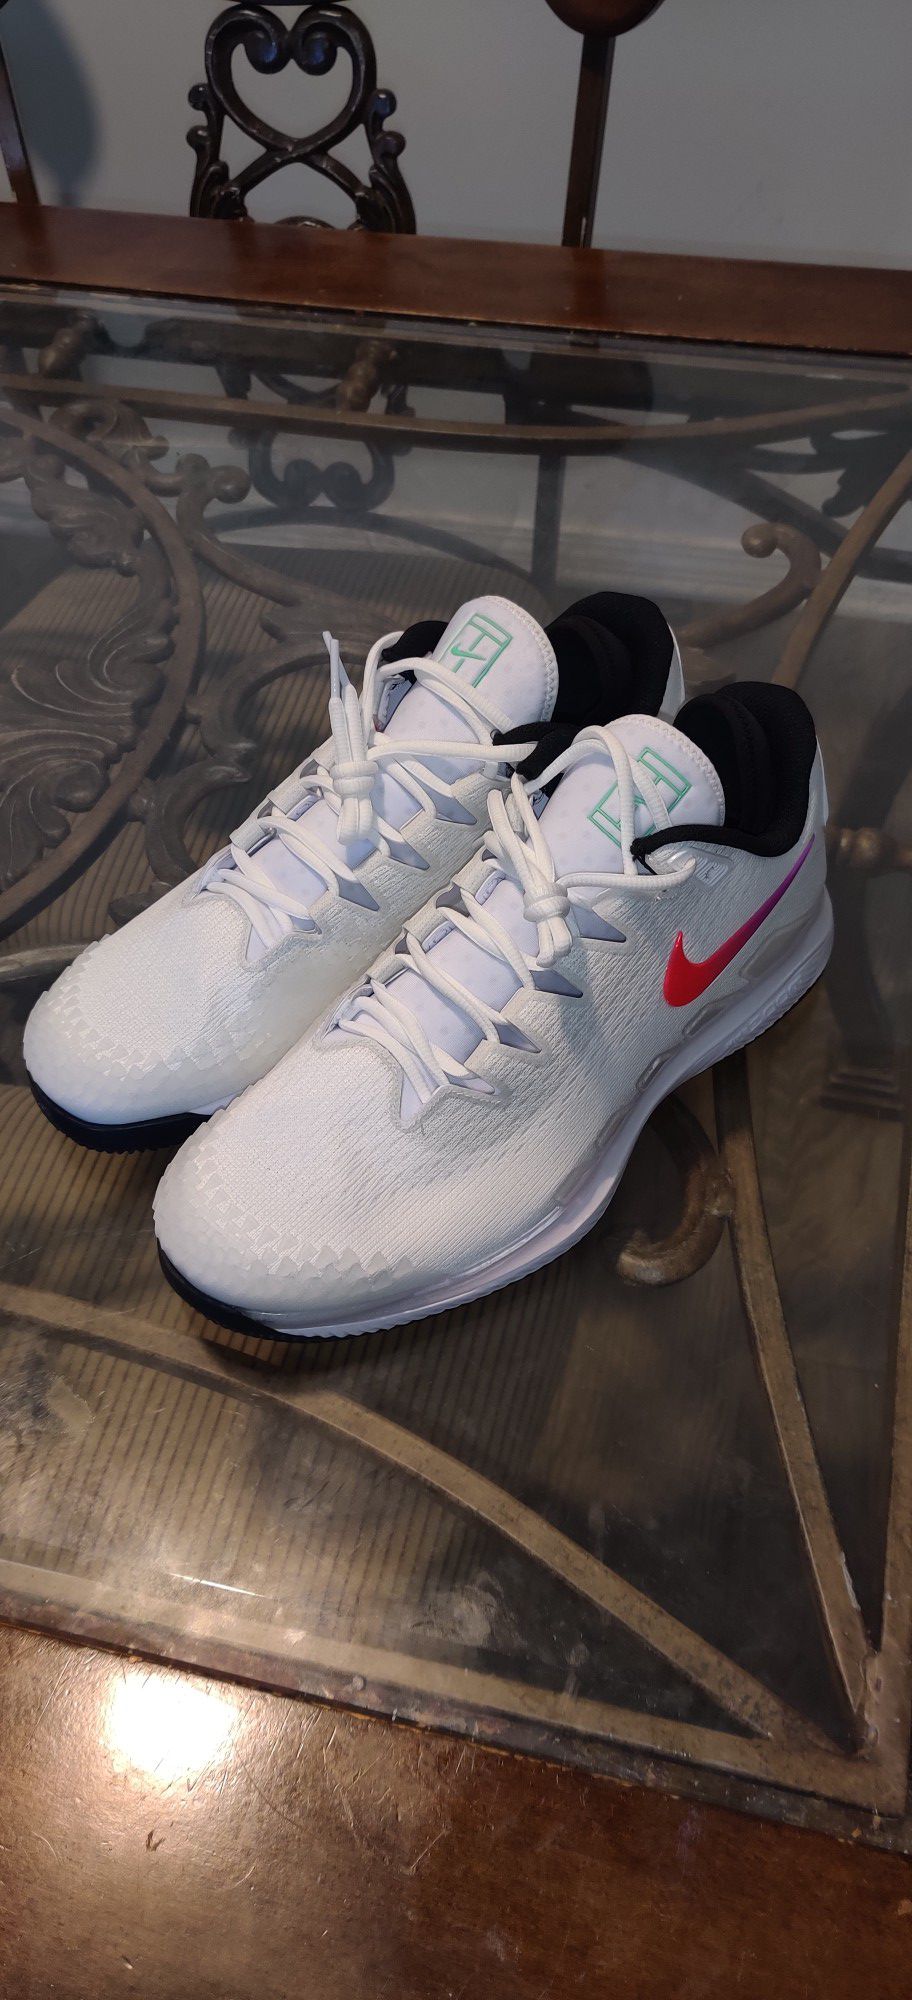 New Nike Air Zoom Vapor X KNIT Size 10.5 Tennis White Shoe AR0496-112